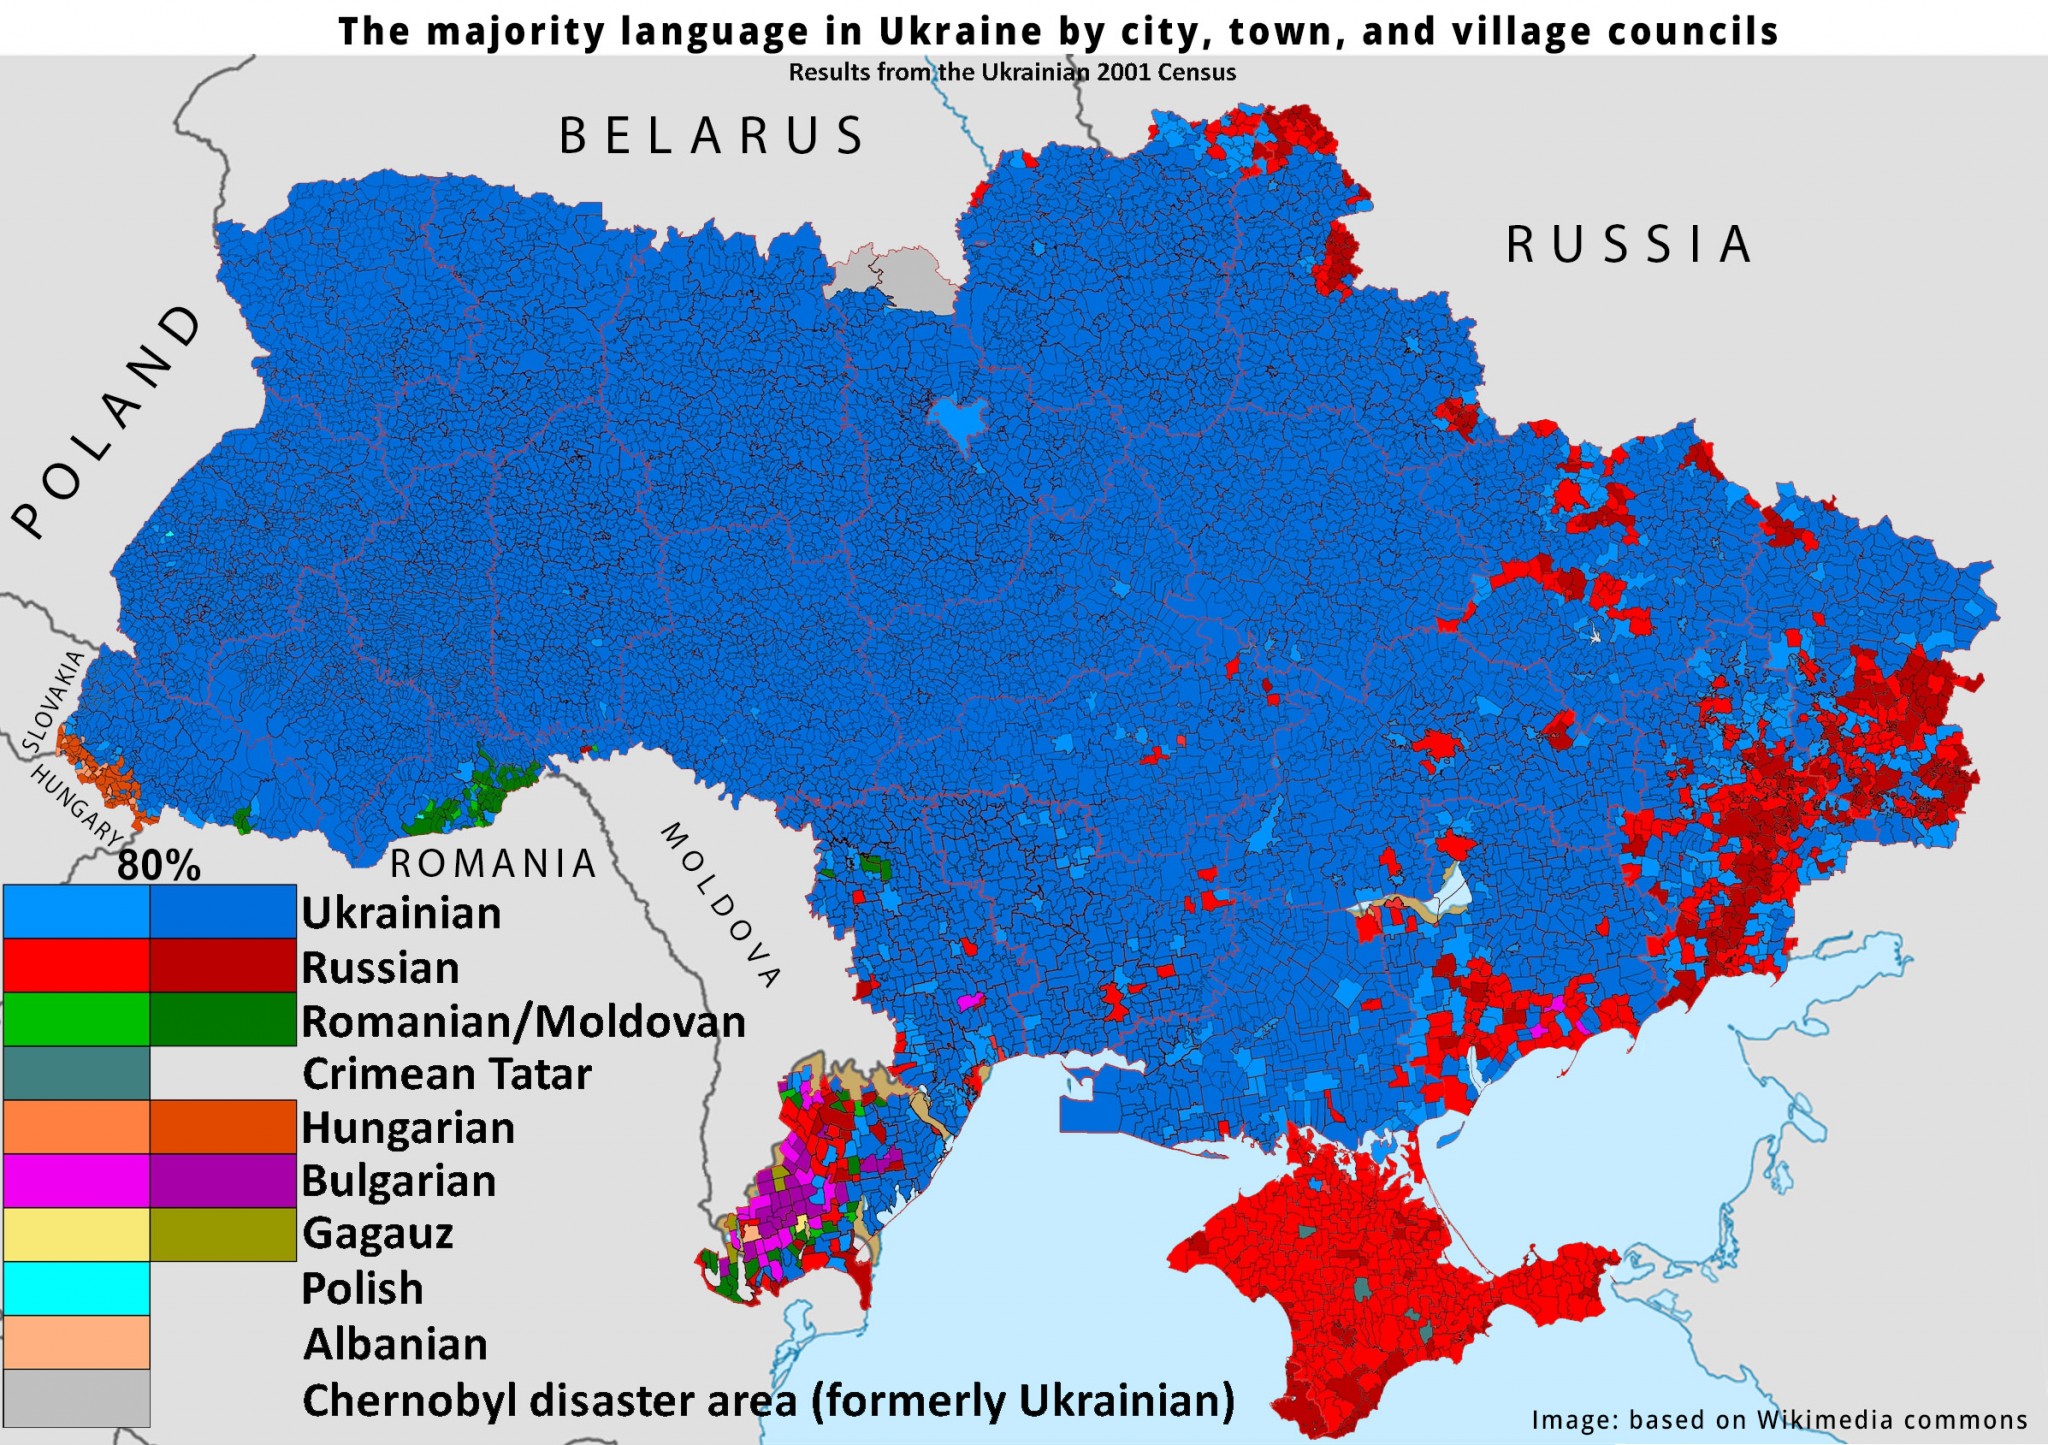 Image: wikimedia commons, edited by Euromaidan Press